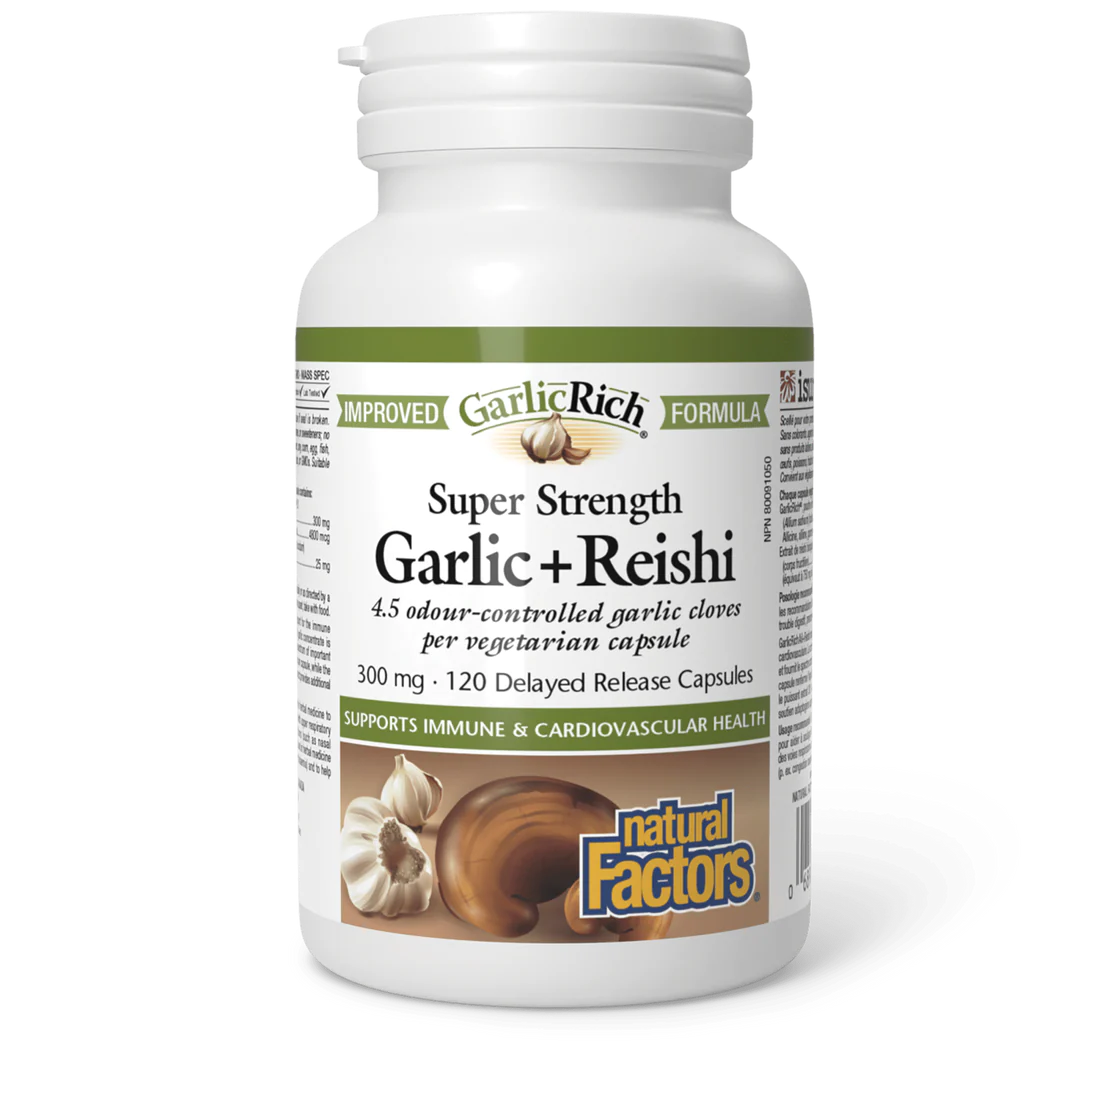 Natural Factors Garlic + Reishi